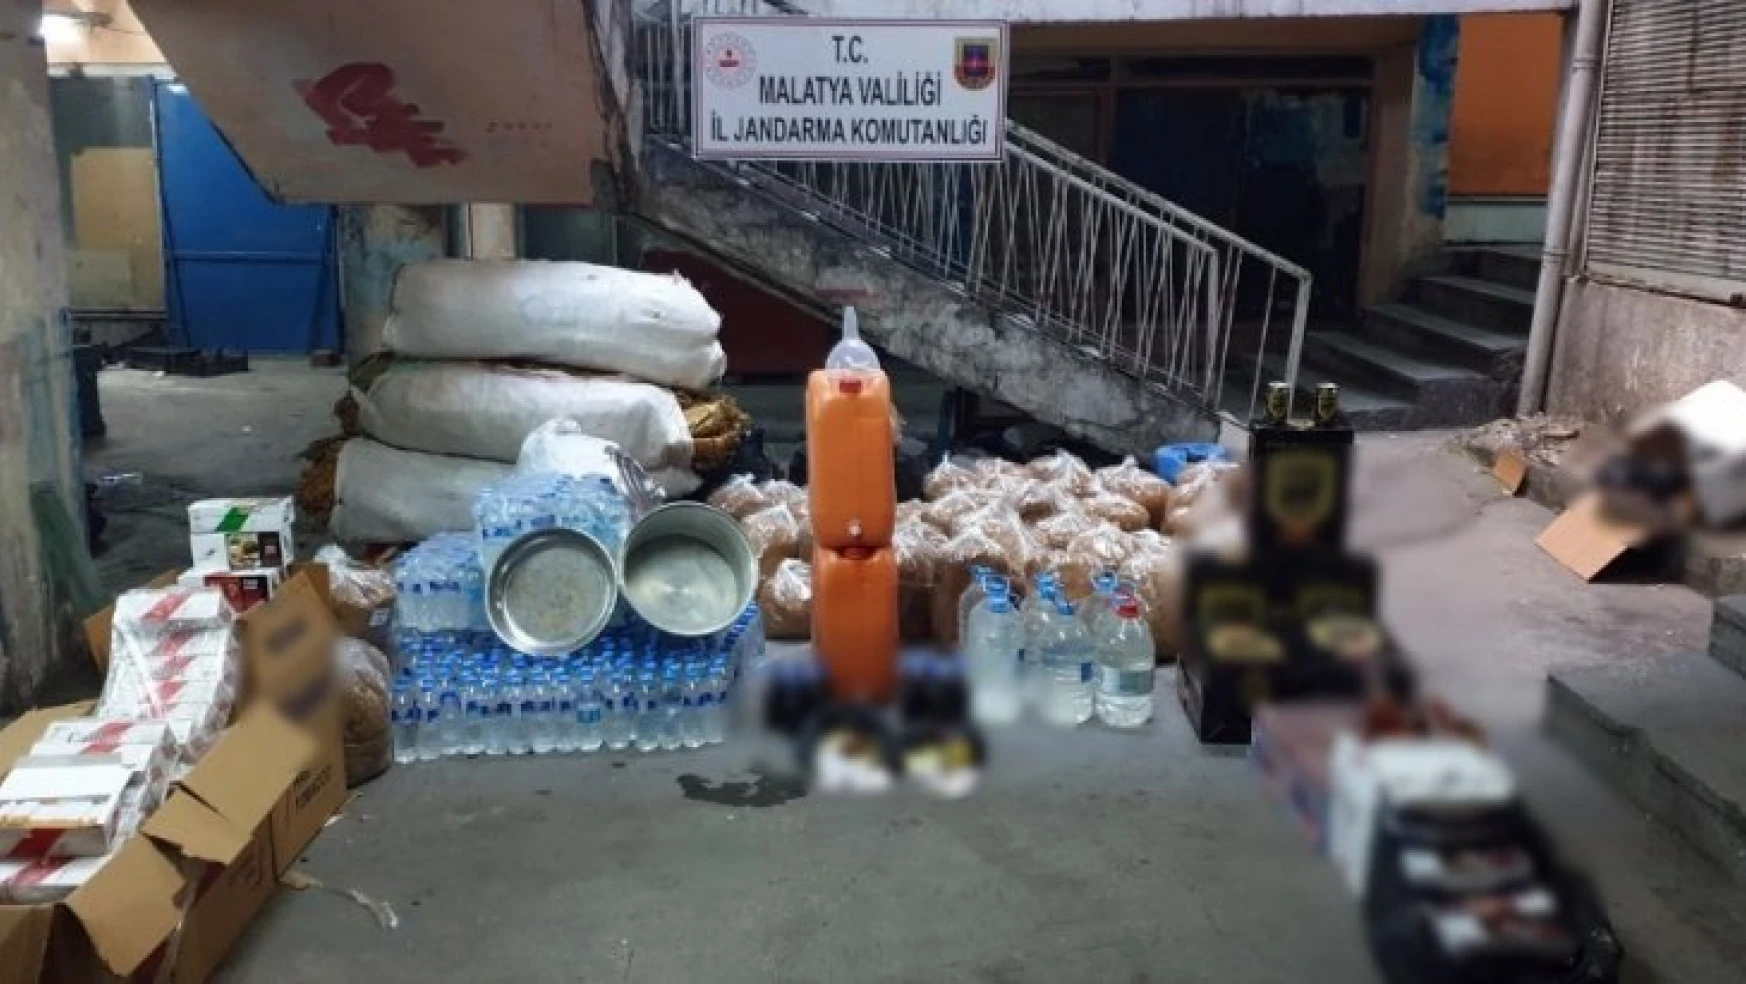 Malatya'da bin 50 litre kaçak içki ele geçirildi